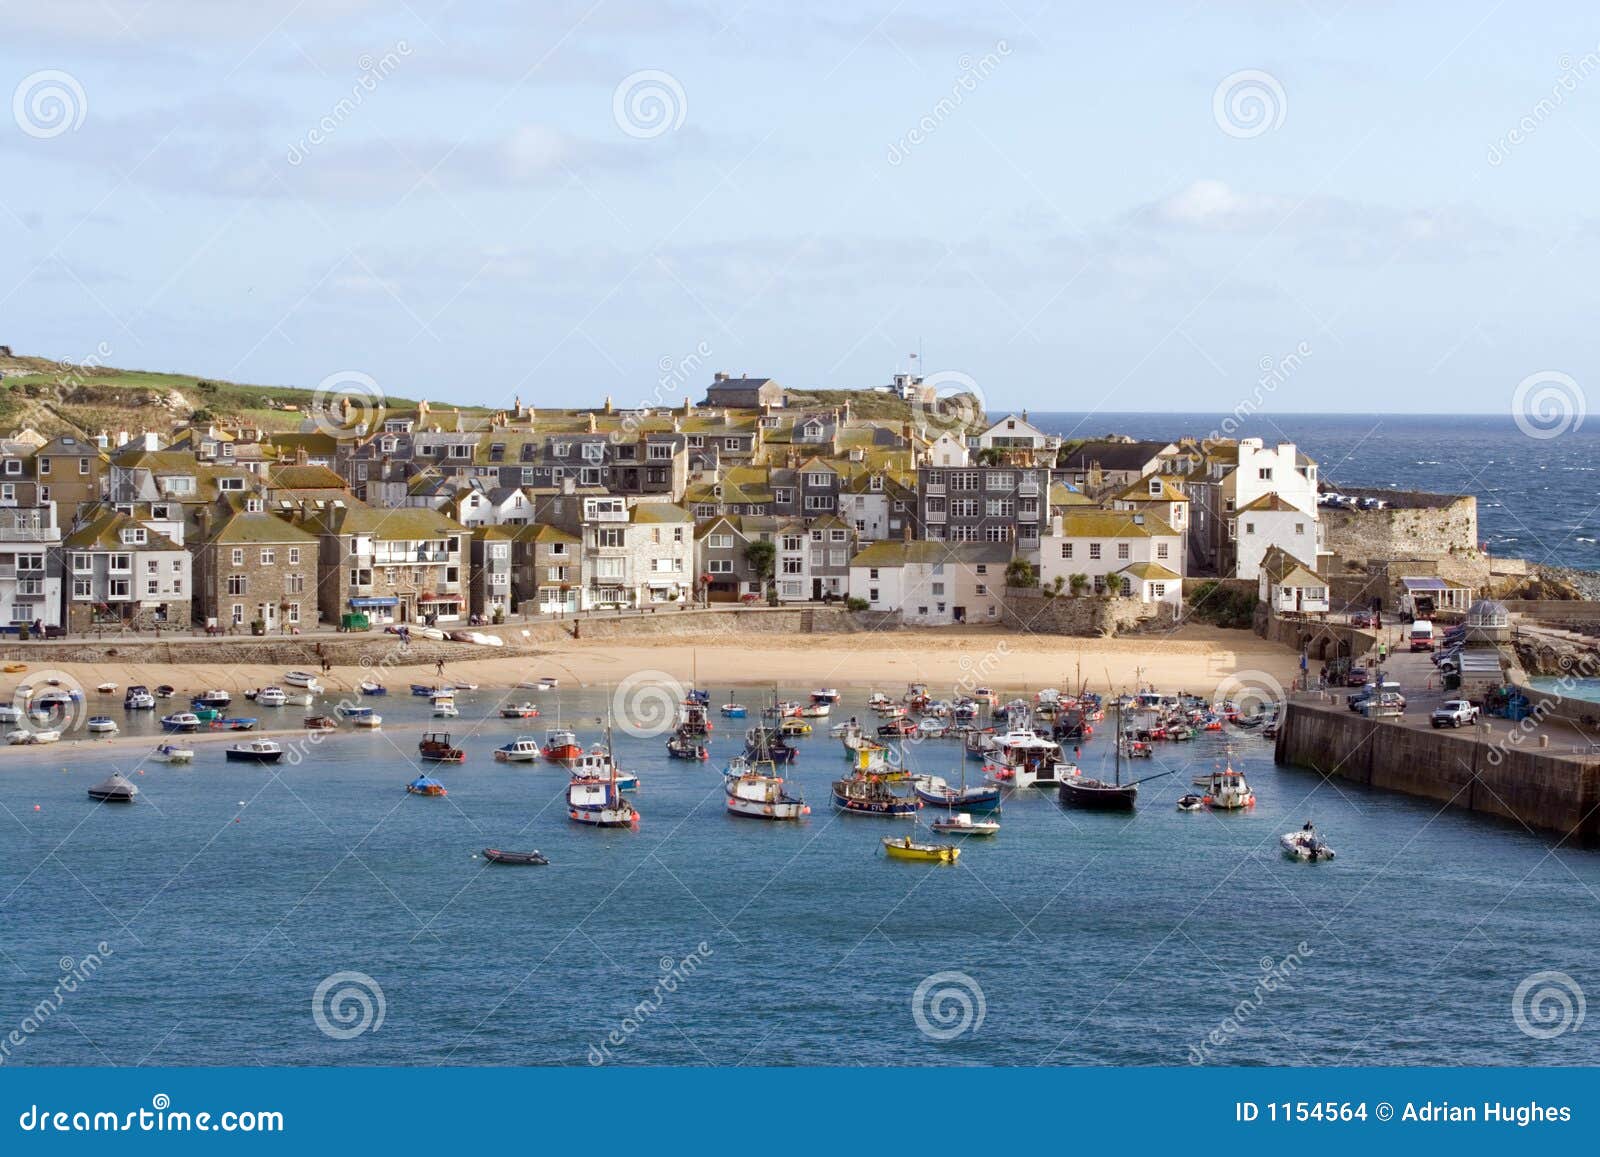 Stock Images: Cornish Harbour